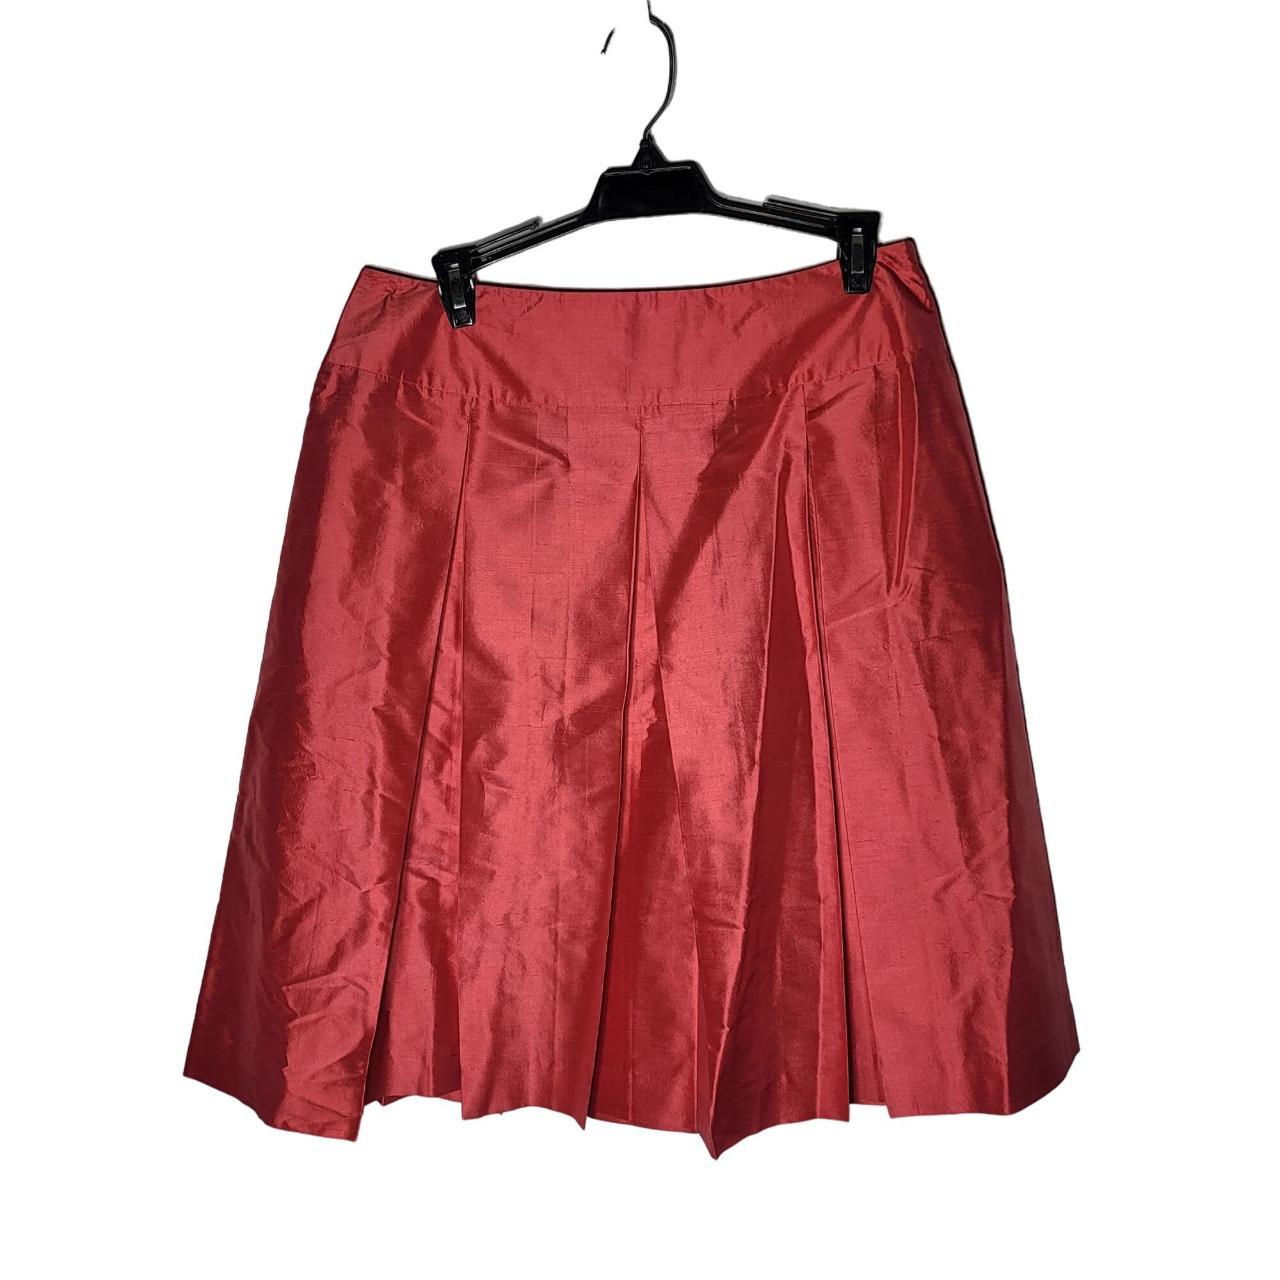 Talbots Collection Women's 100% Pure Silk Pink... - Depop